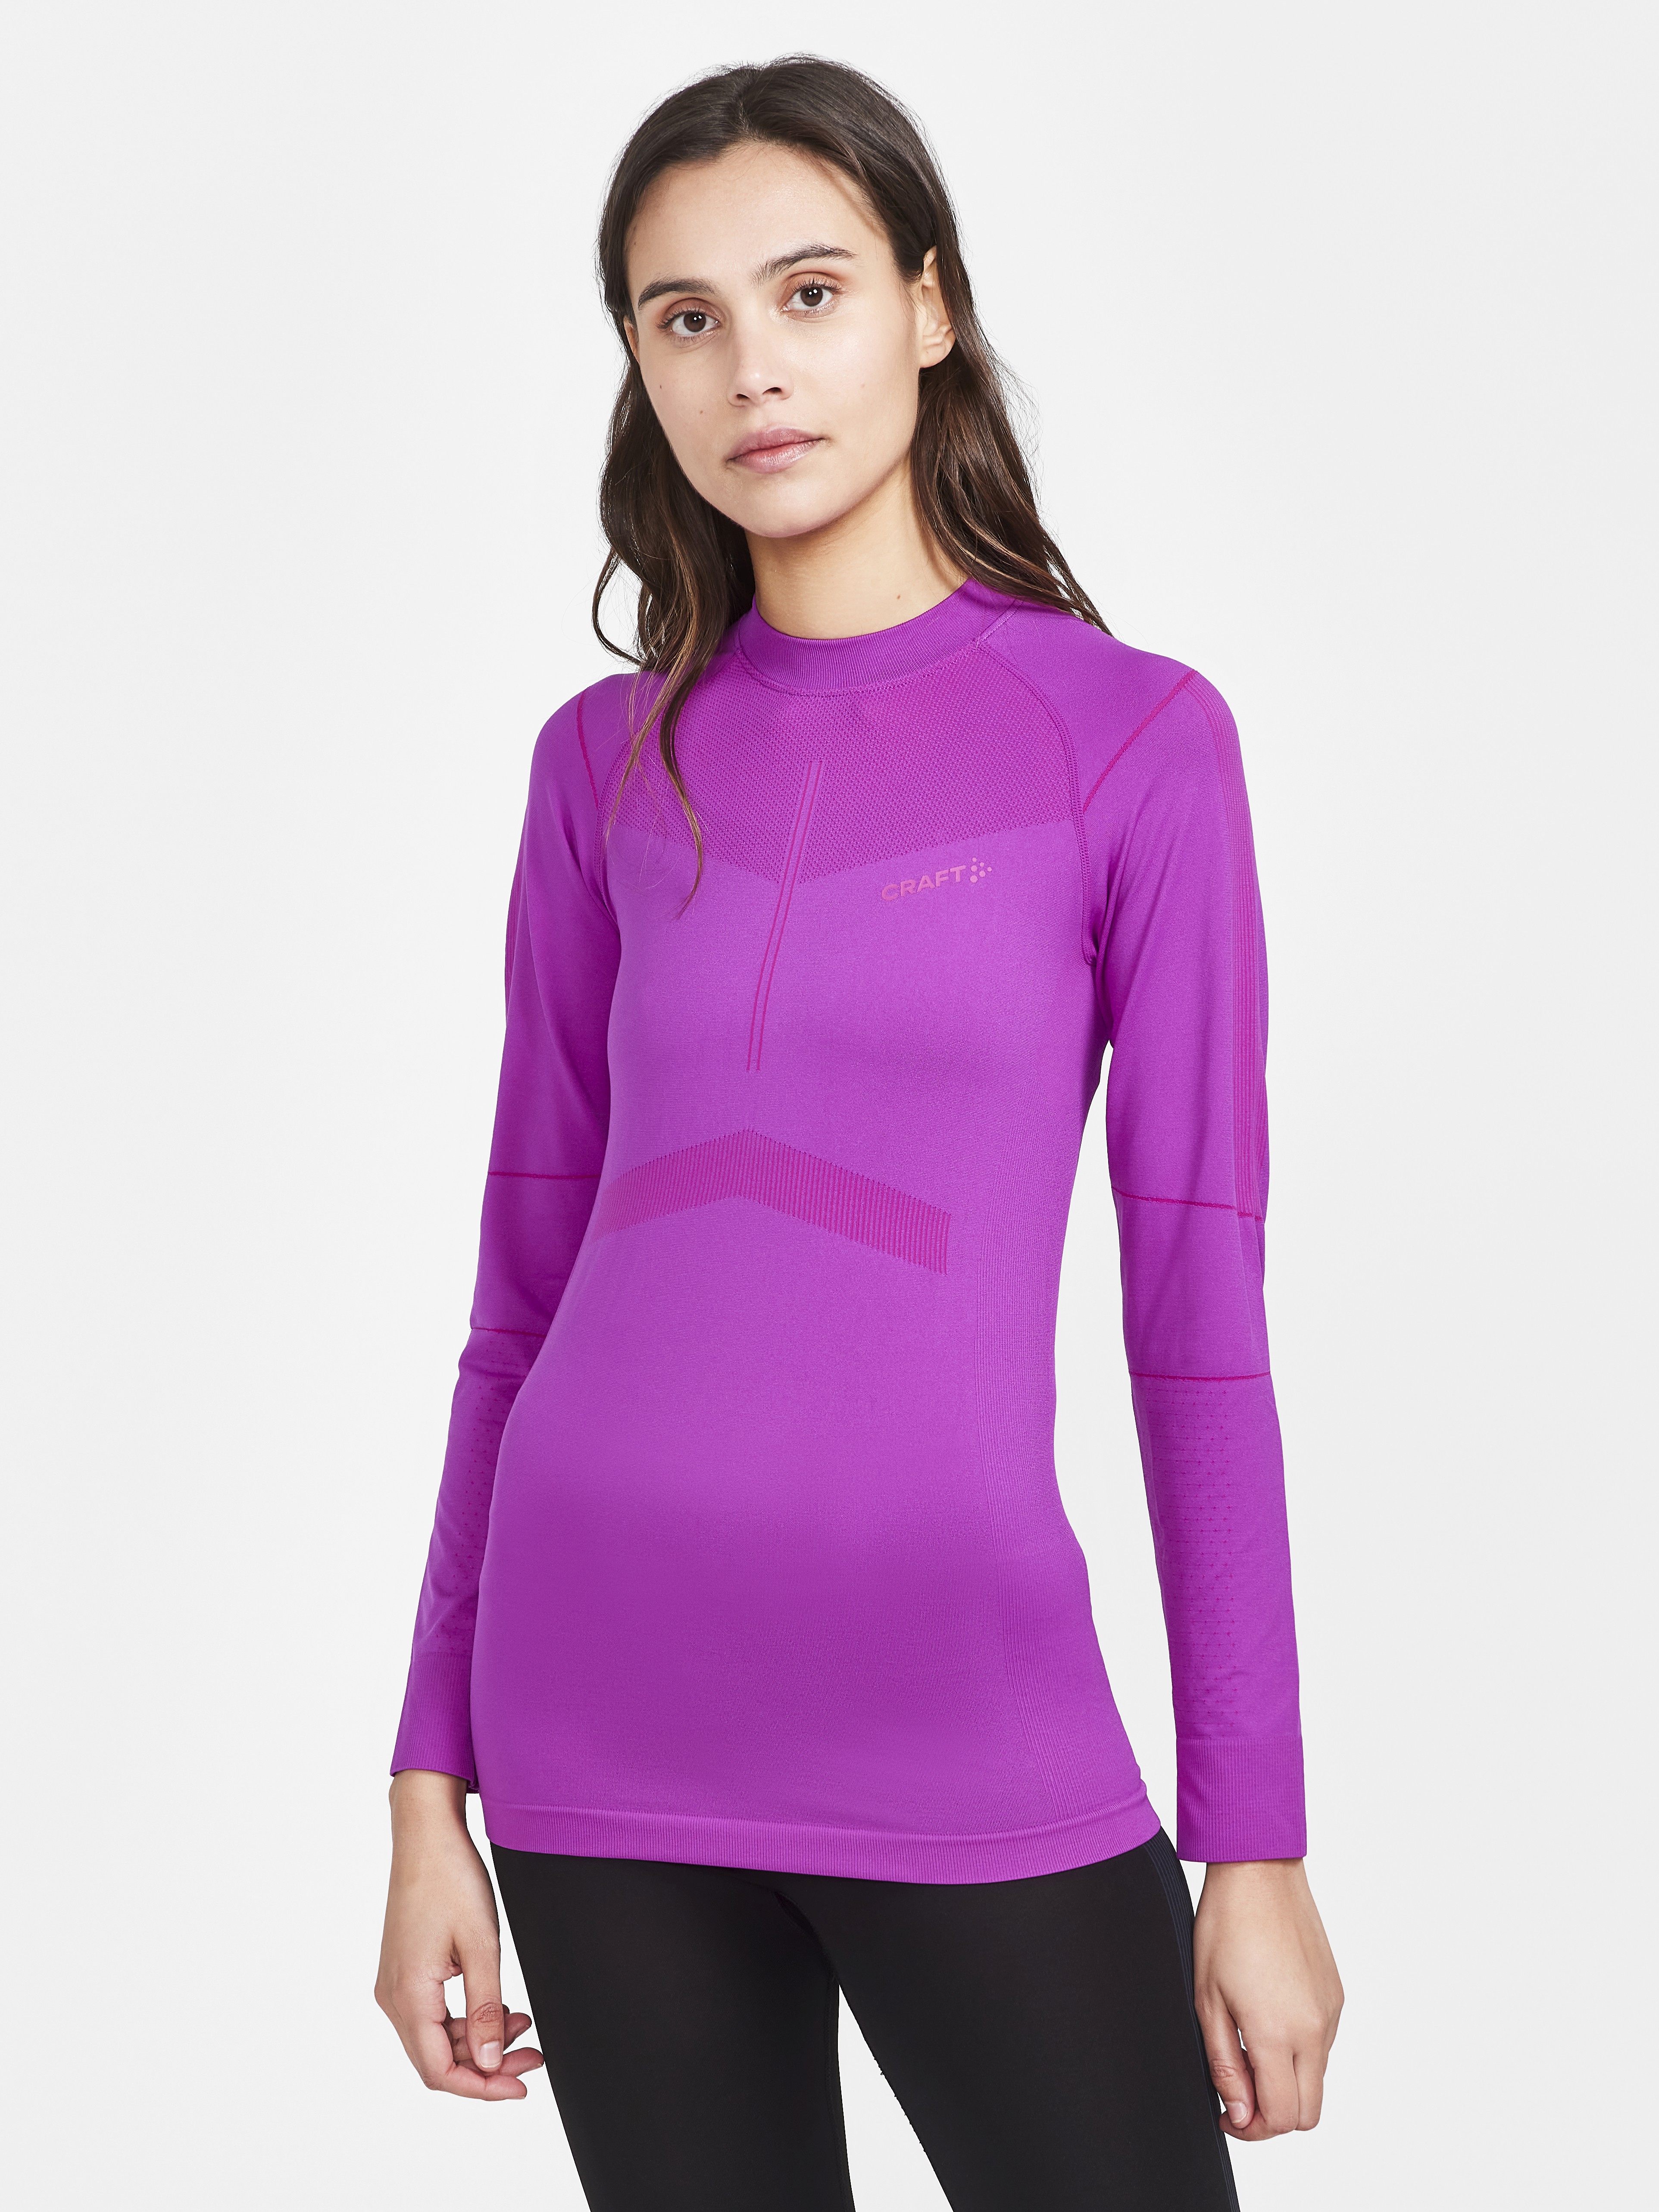 LS Active - Purple CN W Sportswear Intensity | Craft